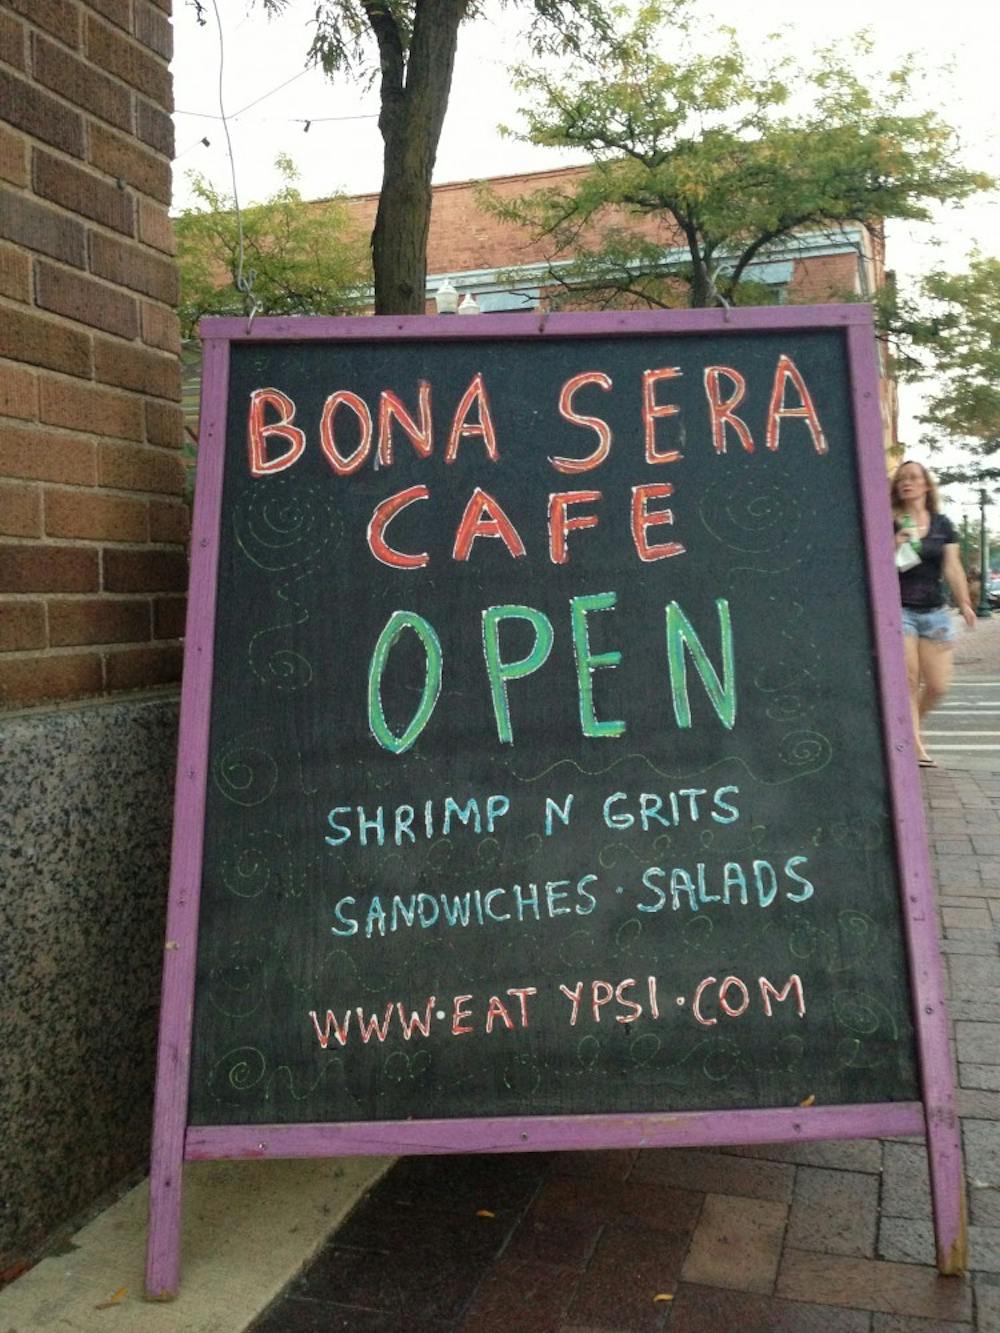 Bona Sera gives off a sense of community